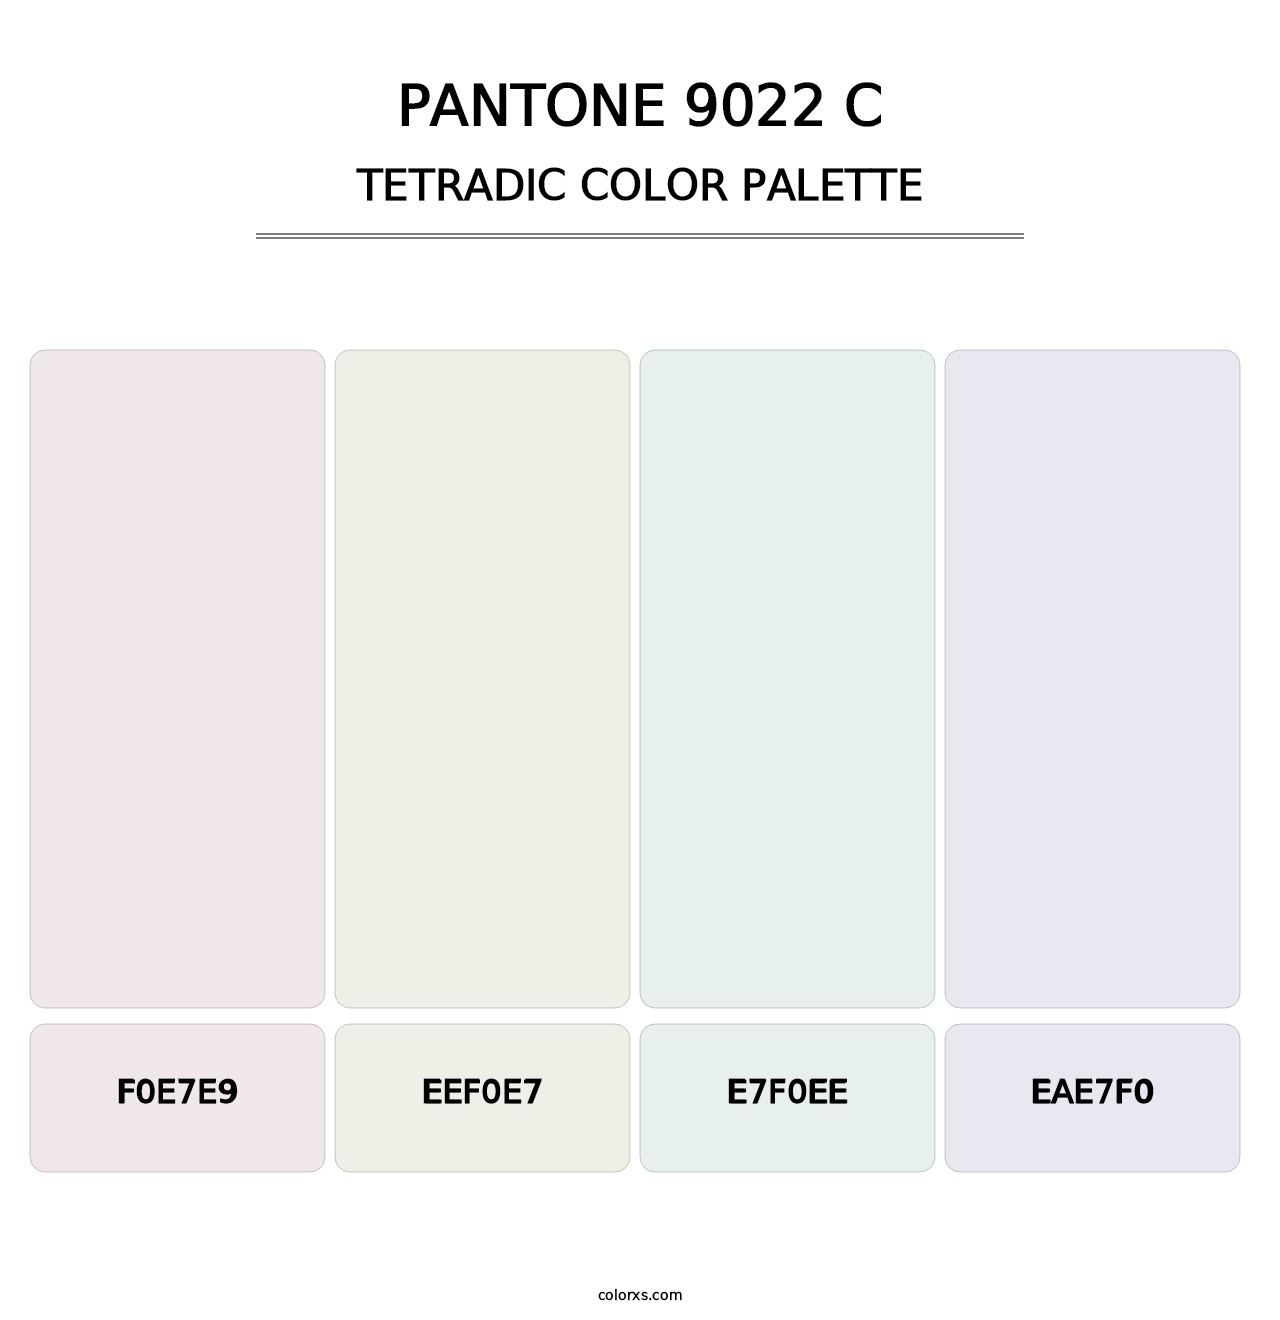 PANTONE 9022 C - Tetradic Color Palette